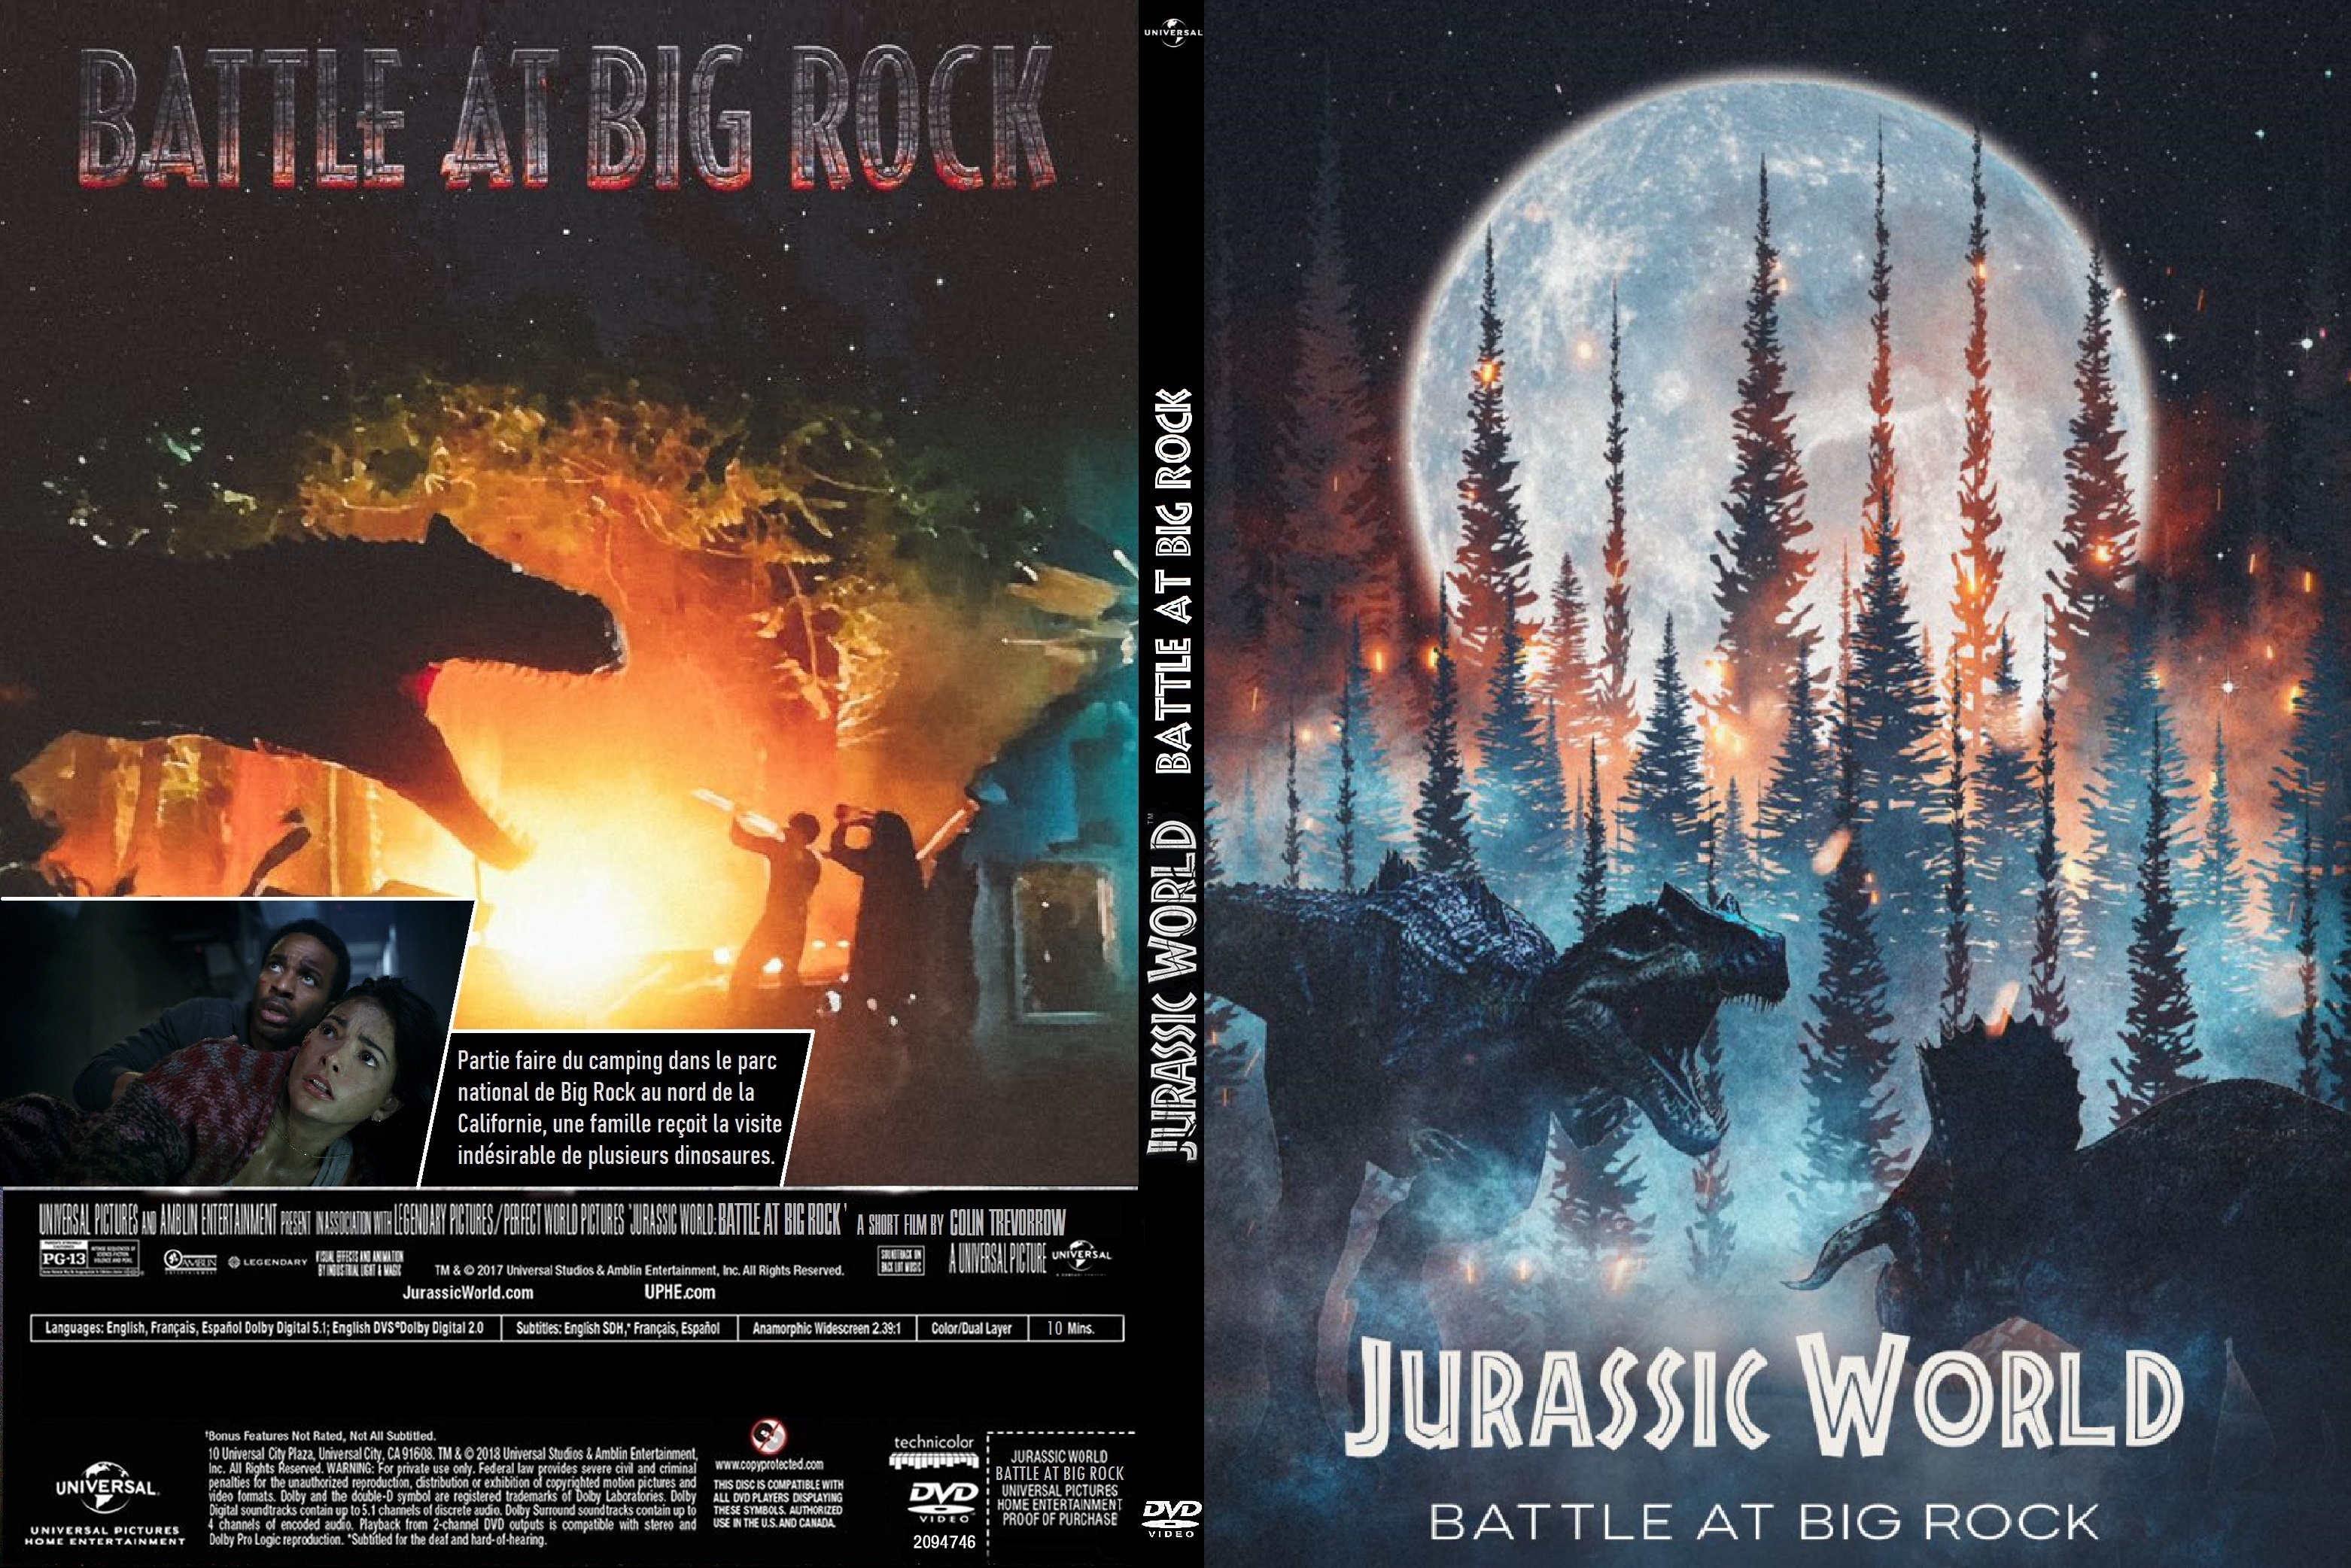 Jaquette DVD Jurassic World Battle at Big Rock custom v2